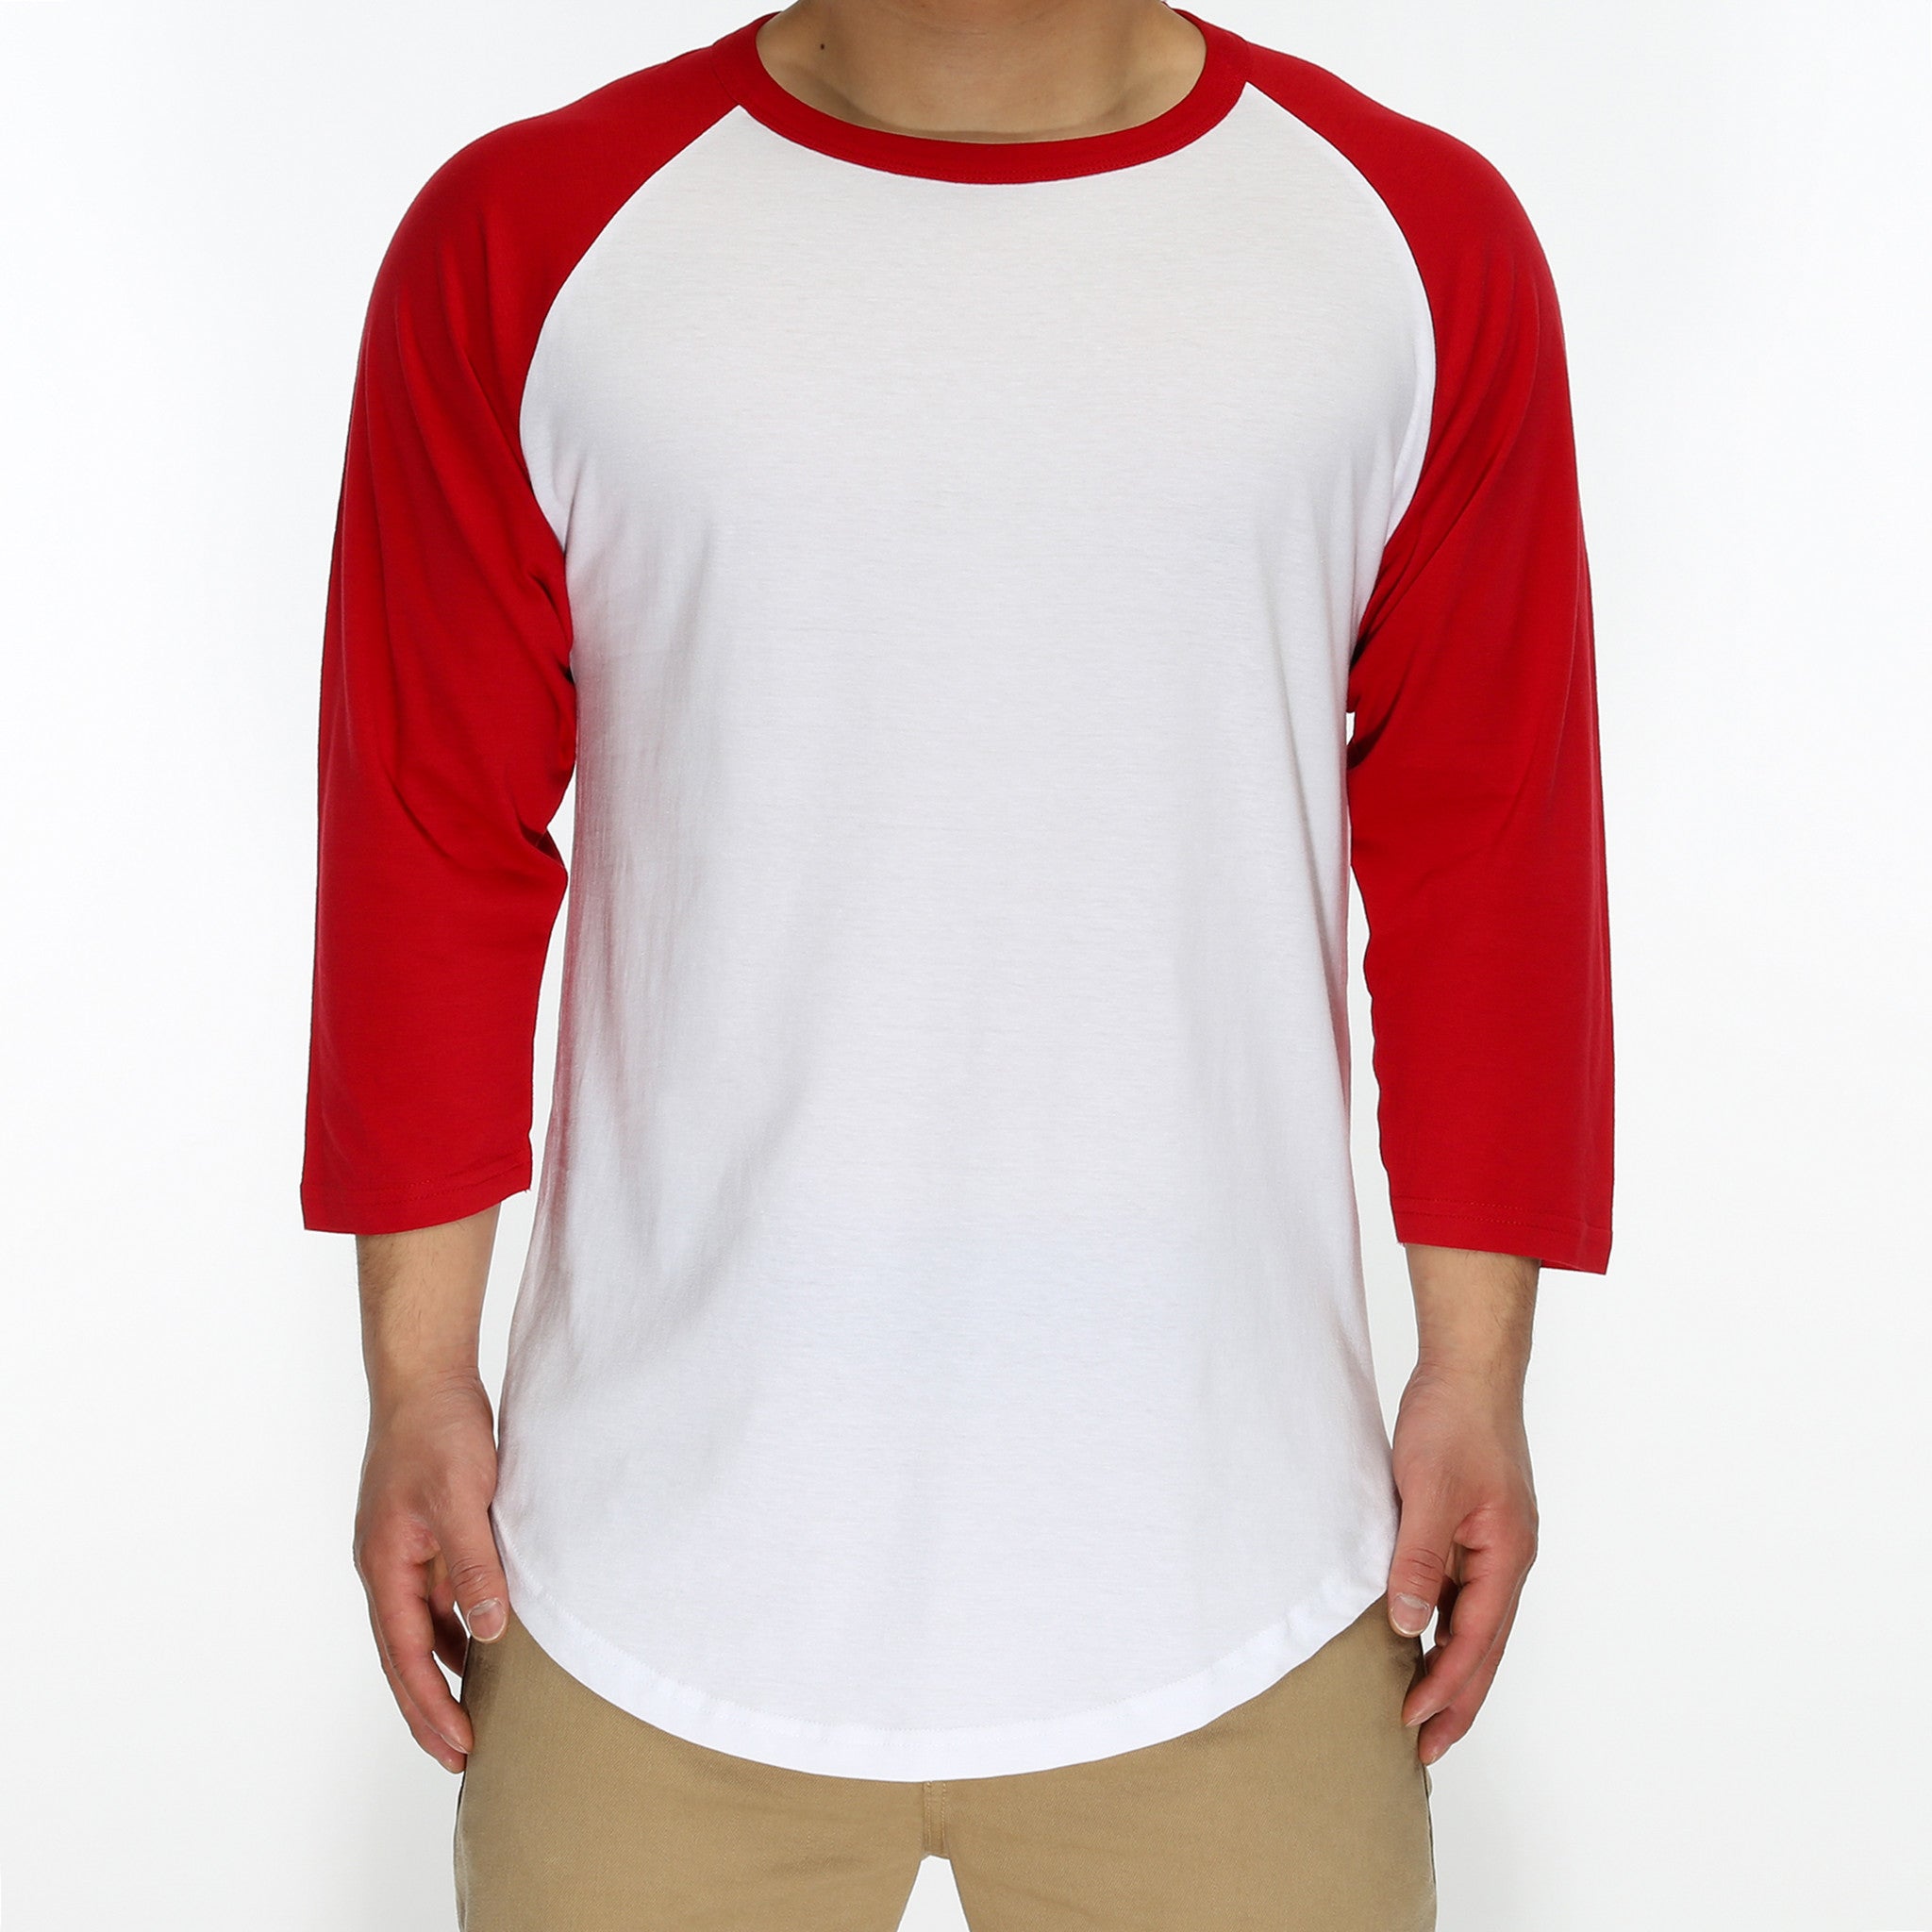 red baseball t shirt